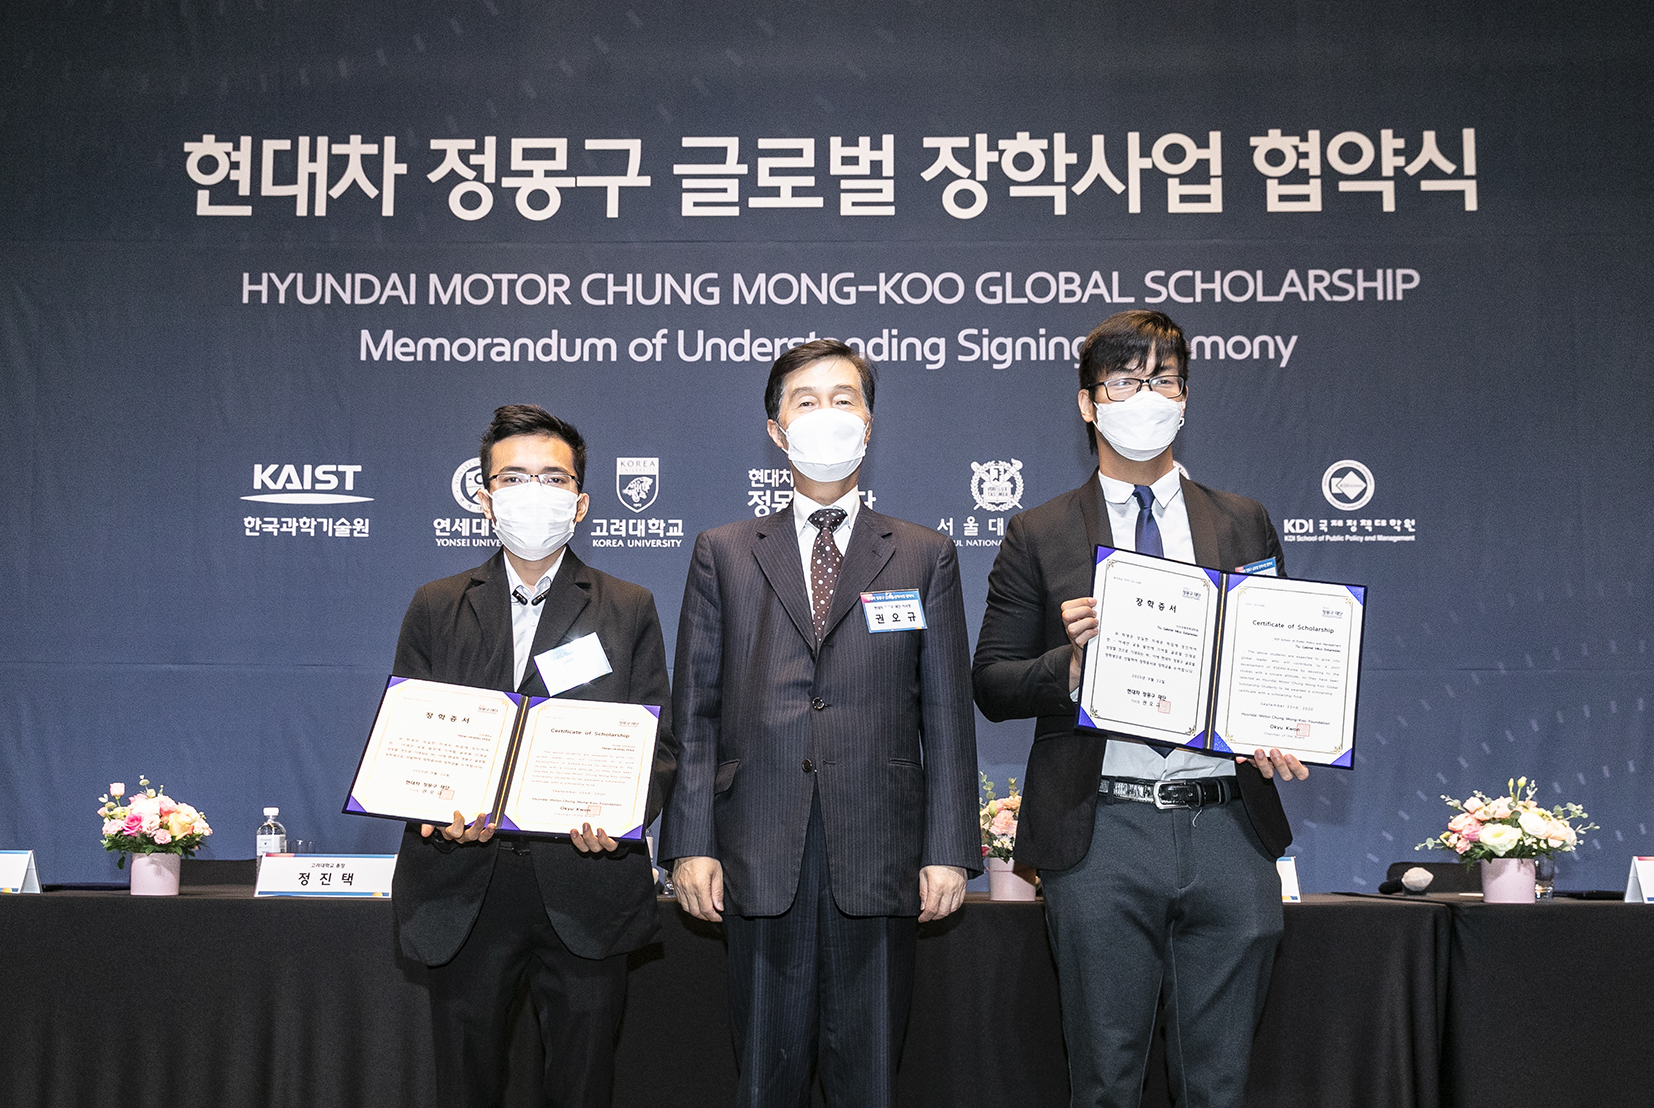 Hyundai Motor Chung Mong-koo Global Scholarship MOU Signing Ceremony